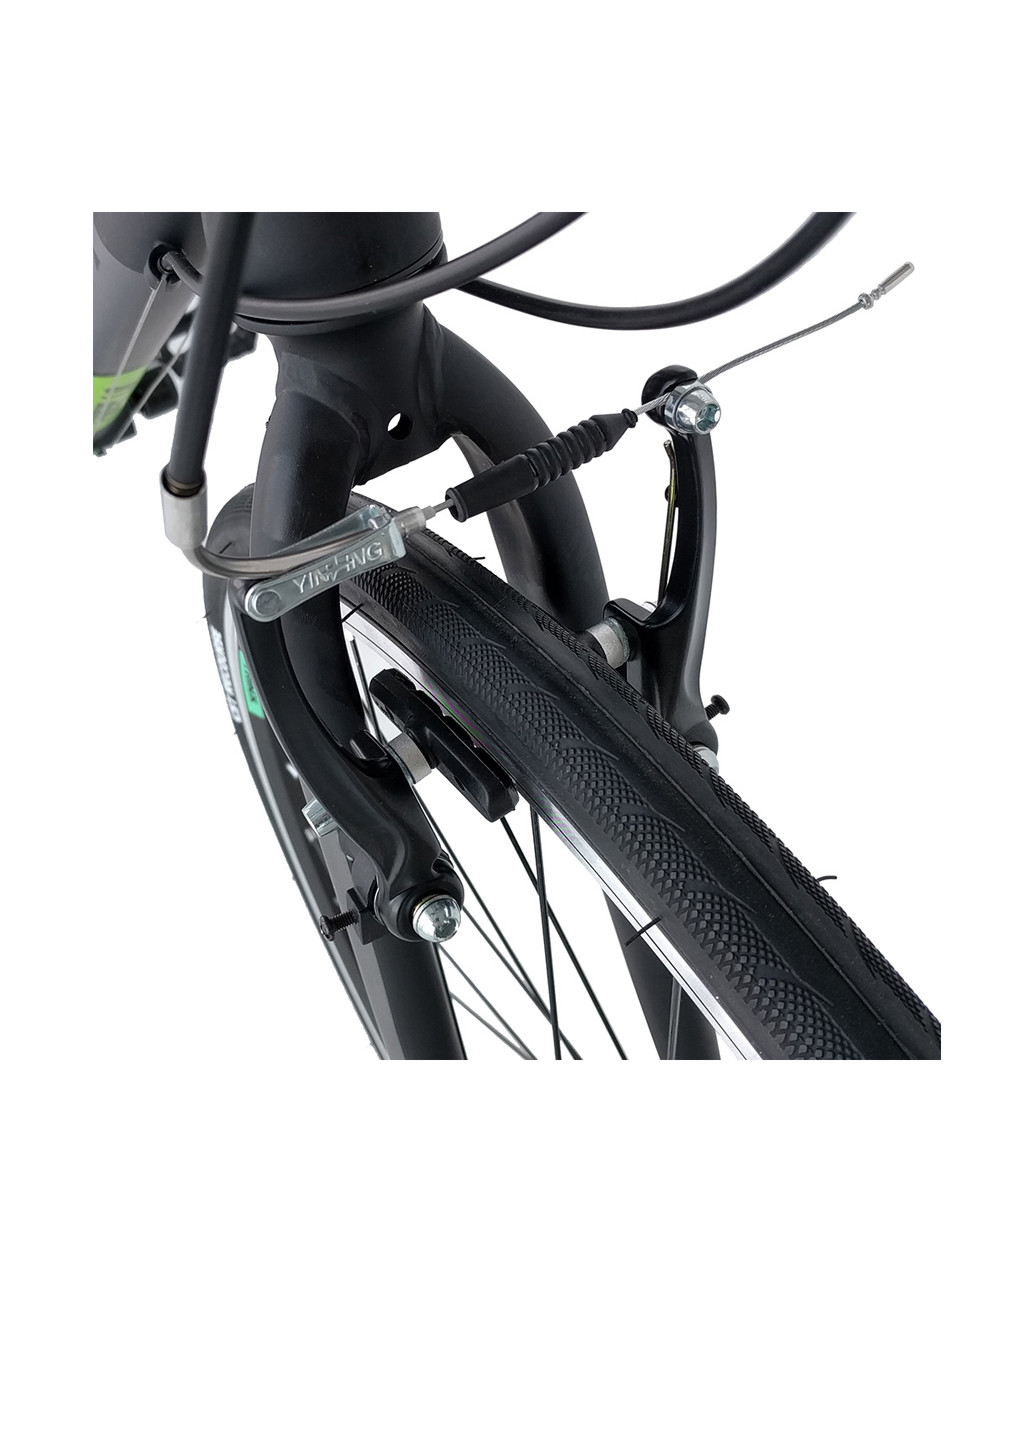 Велосипед Free 1.0 700C * 470 Matt-Black-Grey-Green Trinx free 1.0 700c*470 matt-black-grey-green (146489492)